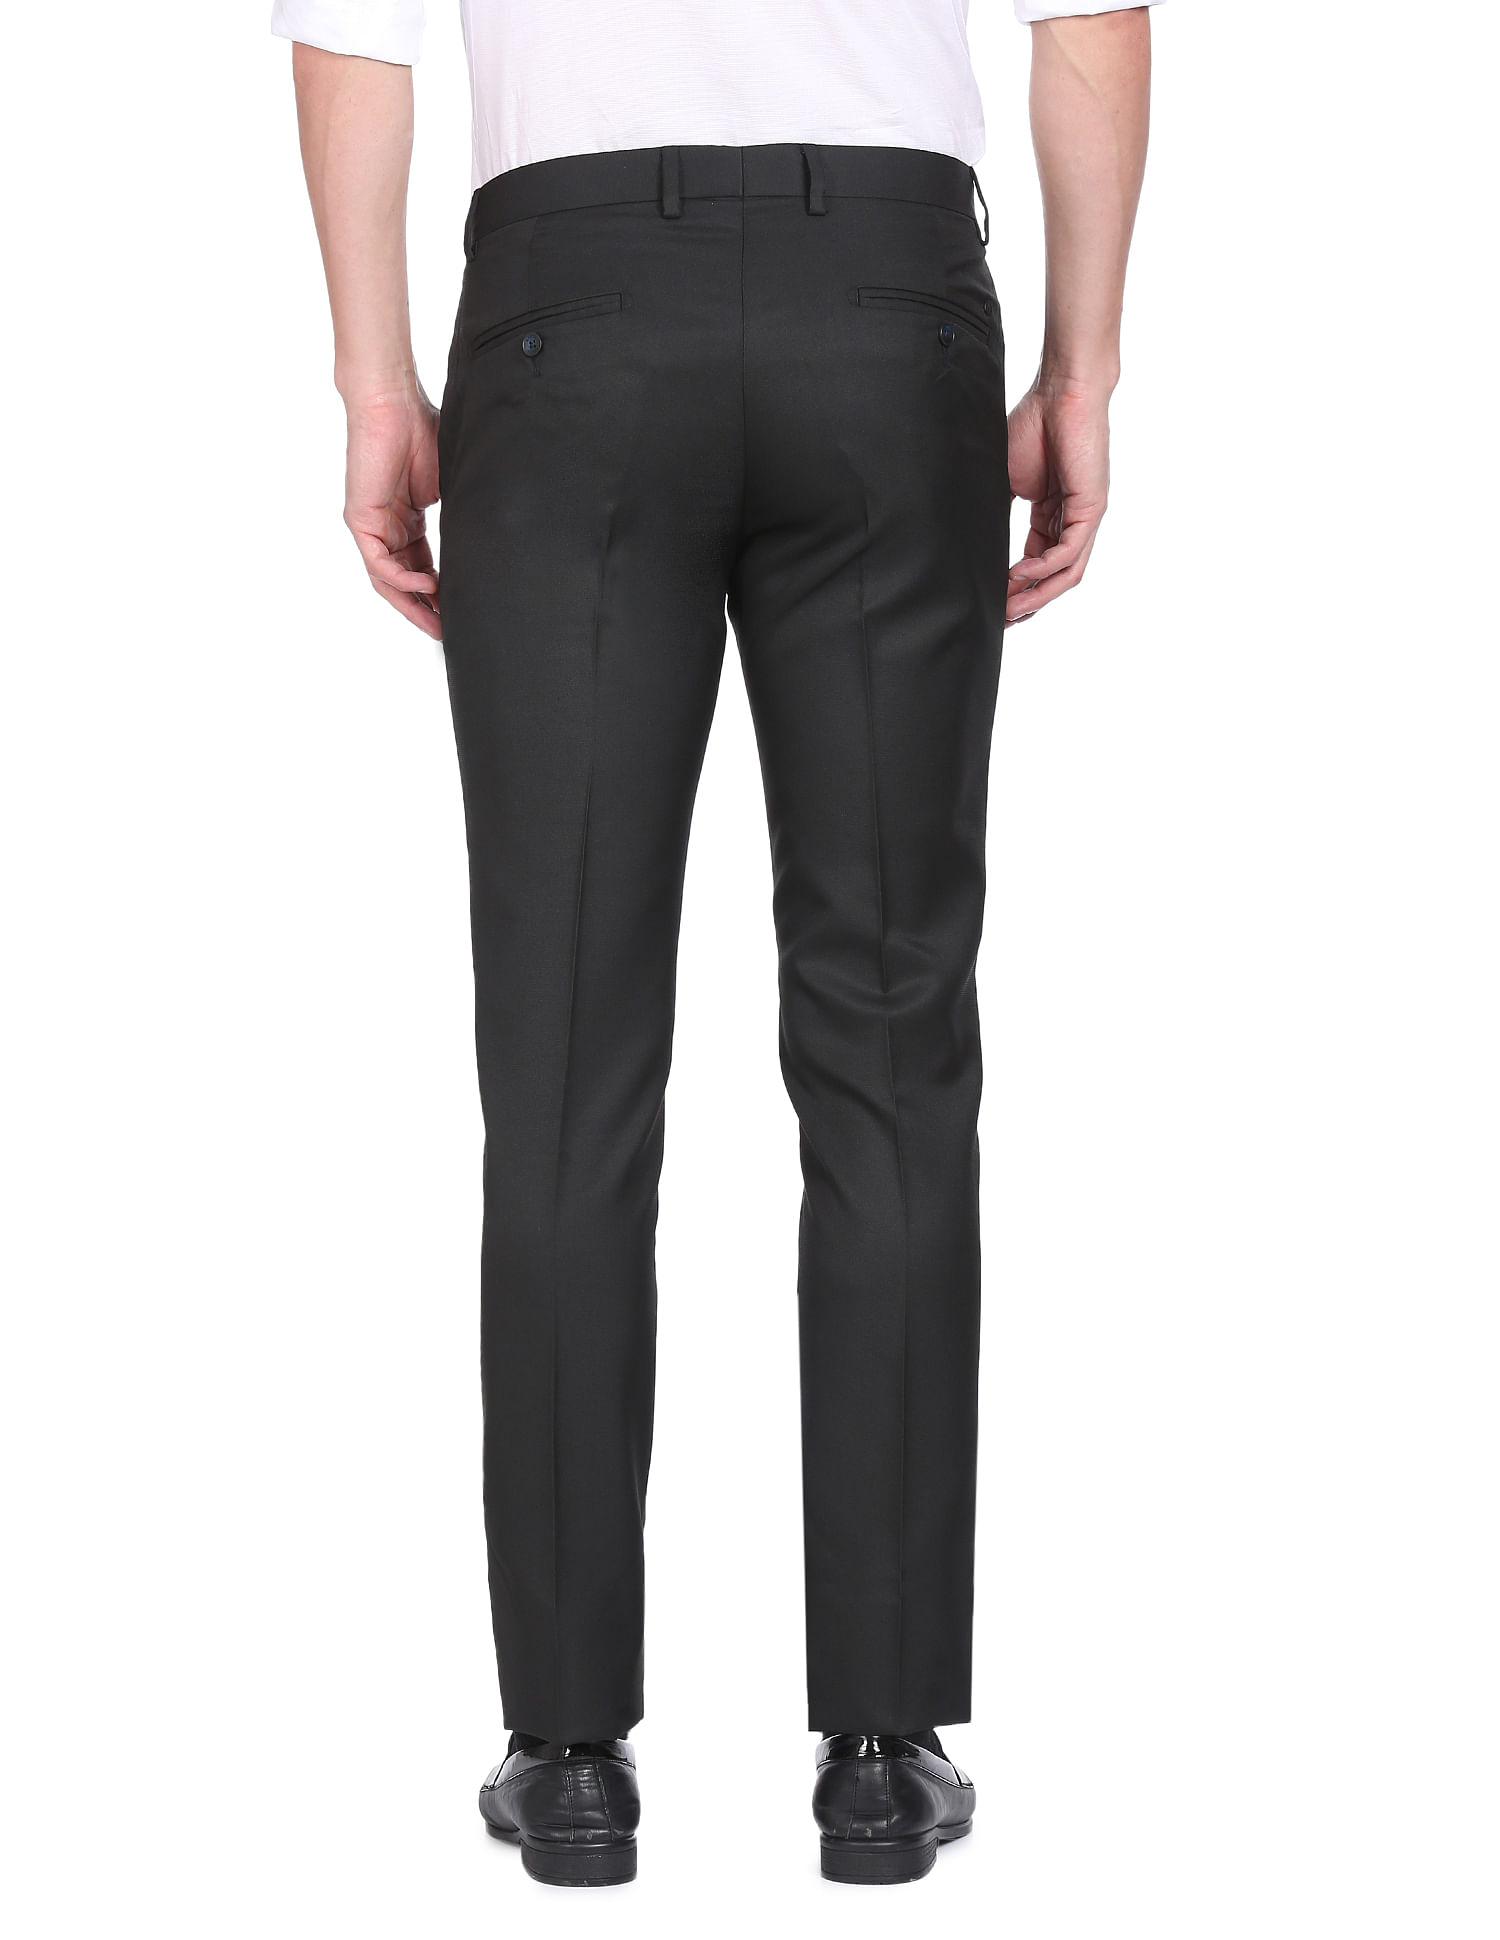 Buy Men Black Solid Regular Fit Trousers Online  224984  Peter England